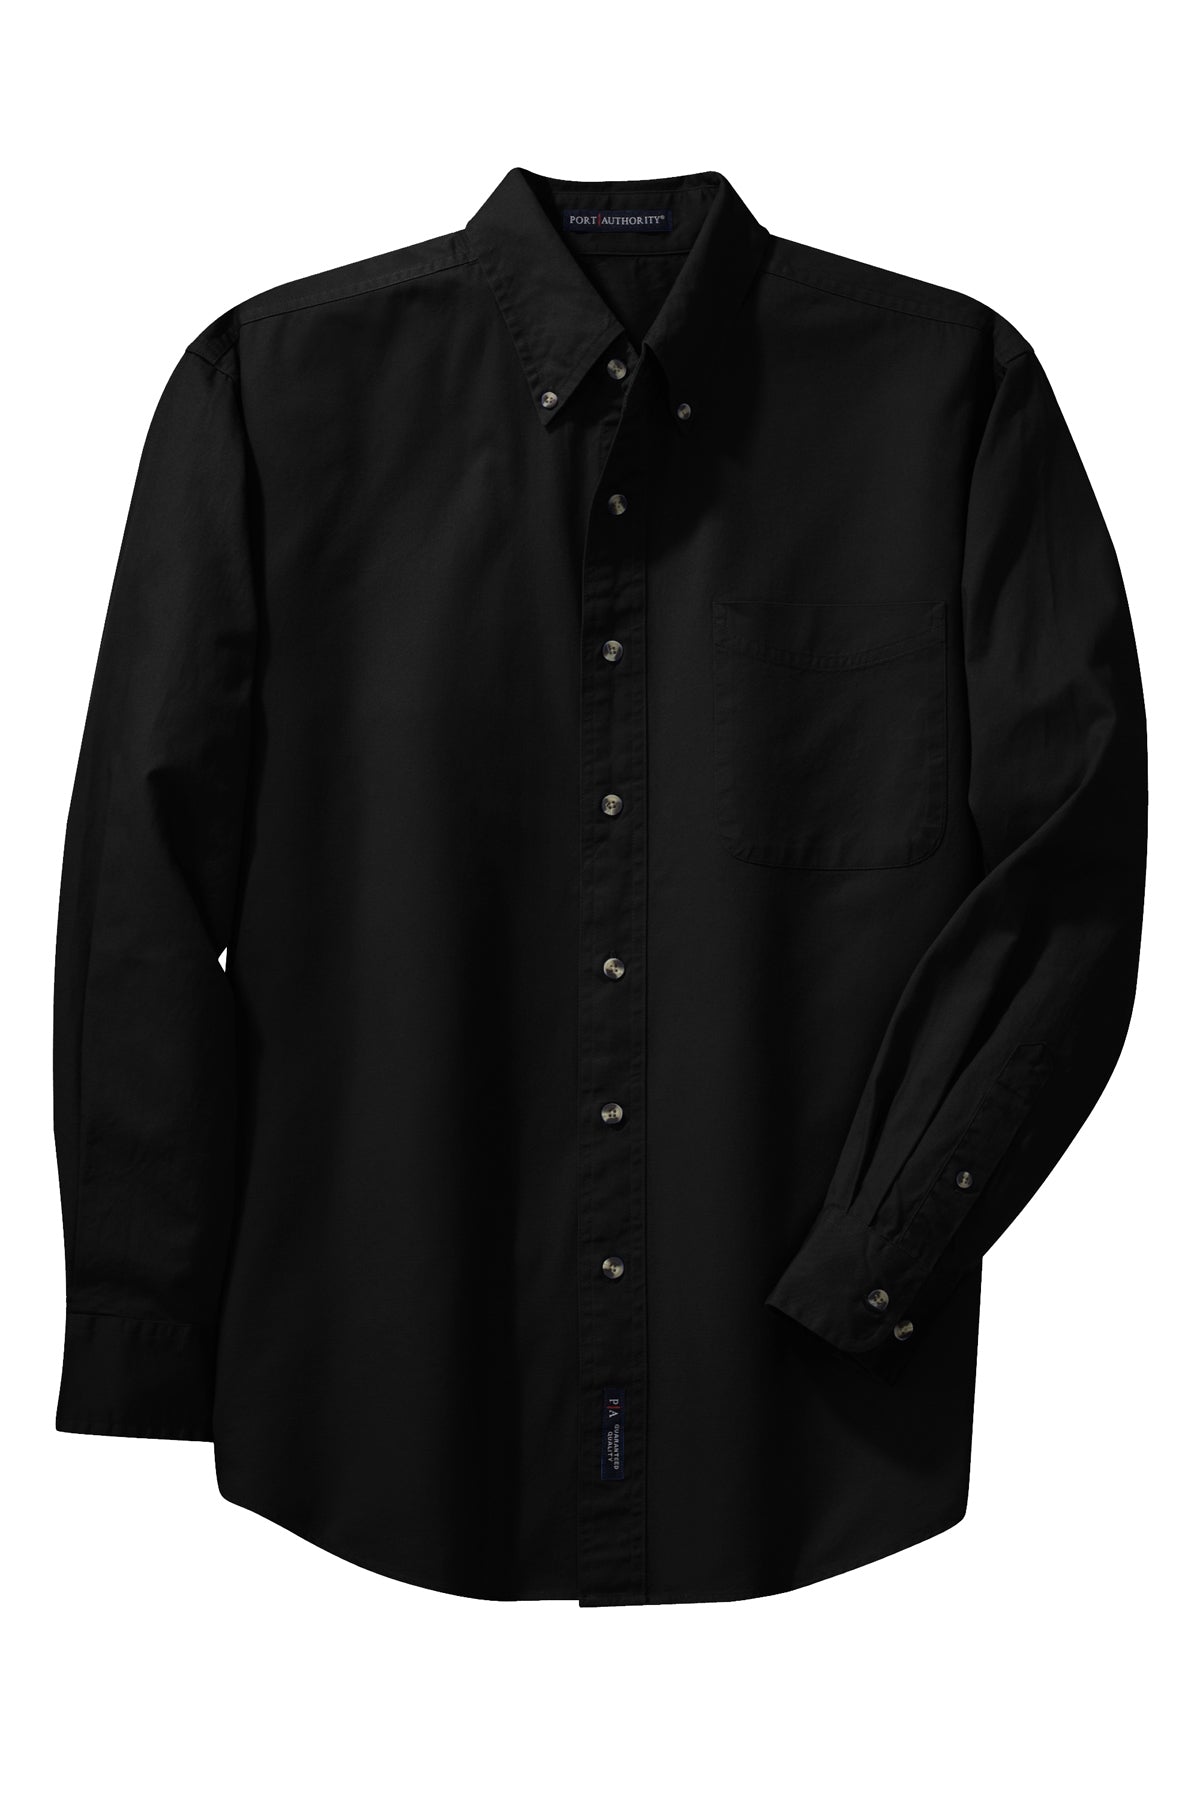 Port Authority® Long Sleeve Twill Shirt - S600T - Black